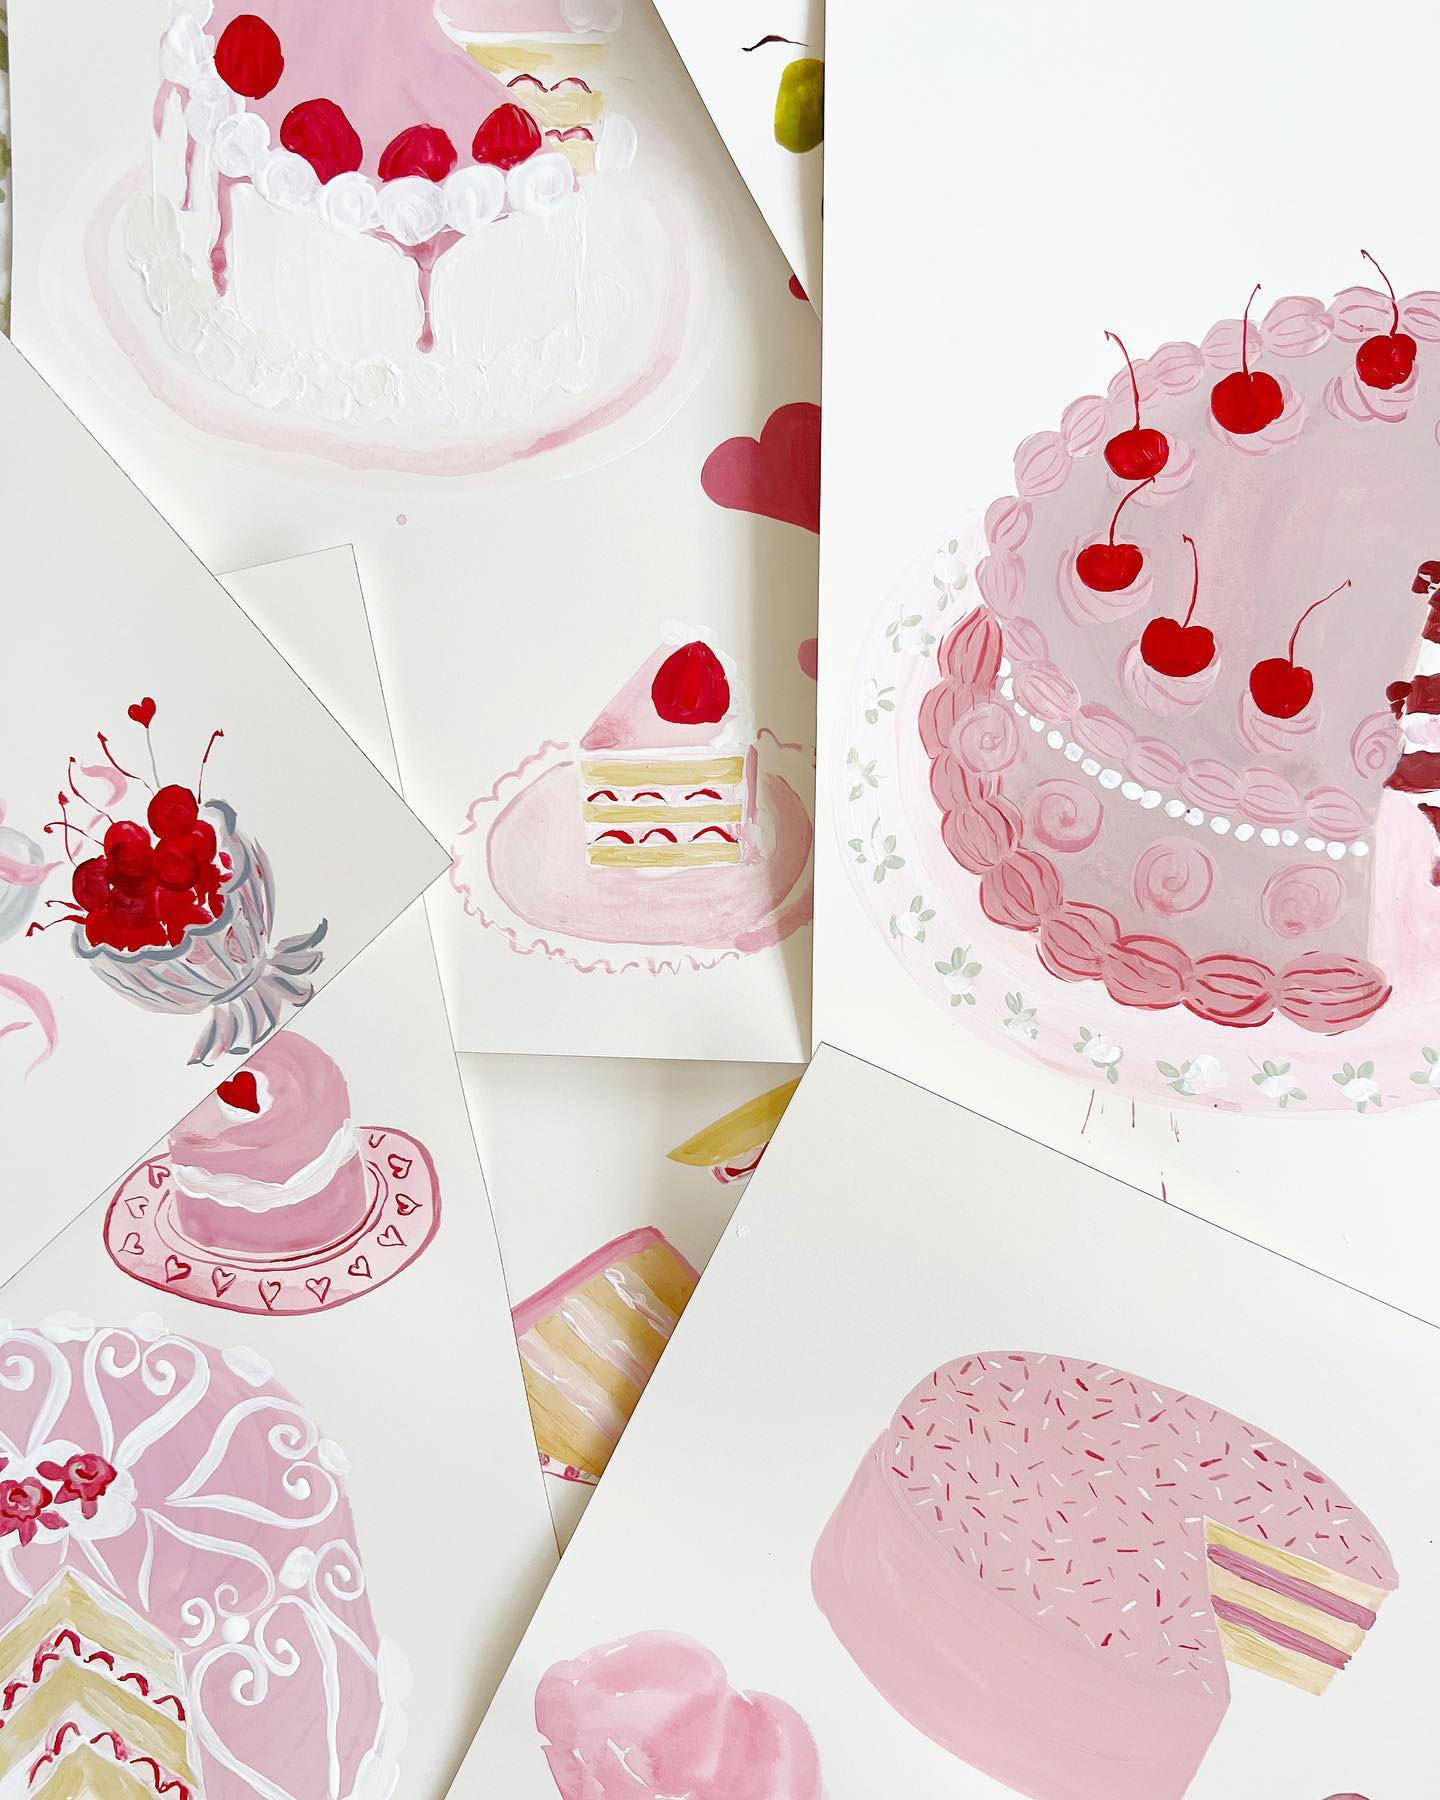 Cherry desserts illustrations 🎂🍰 by Tara Roma Gill